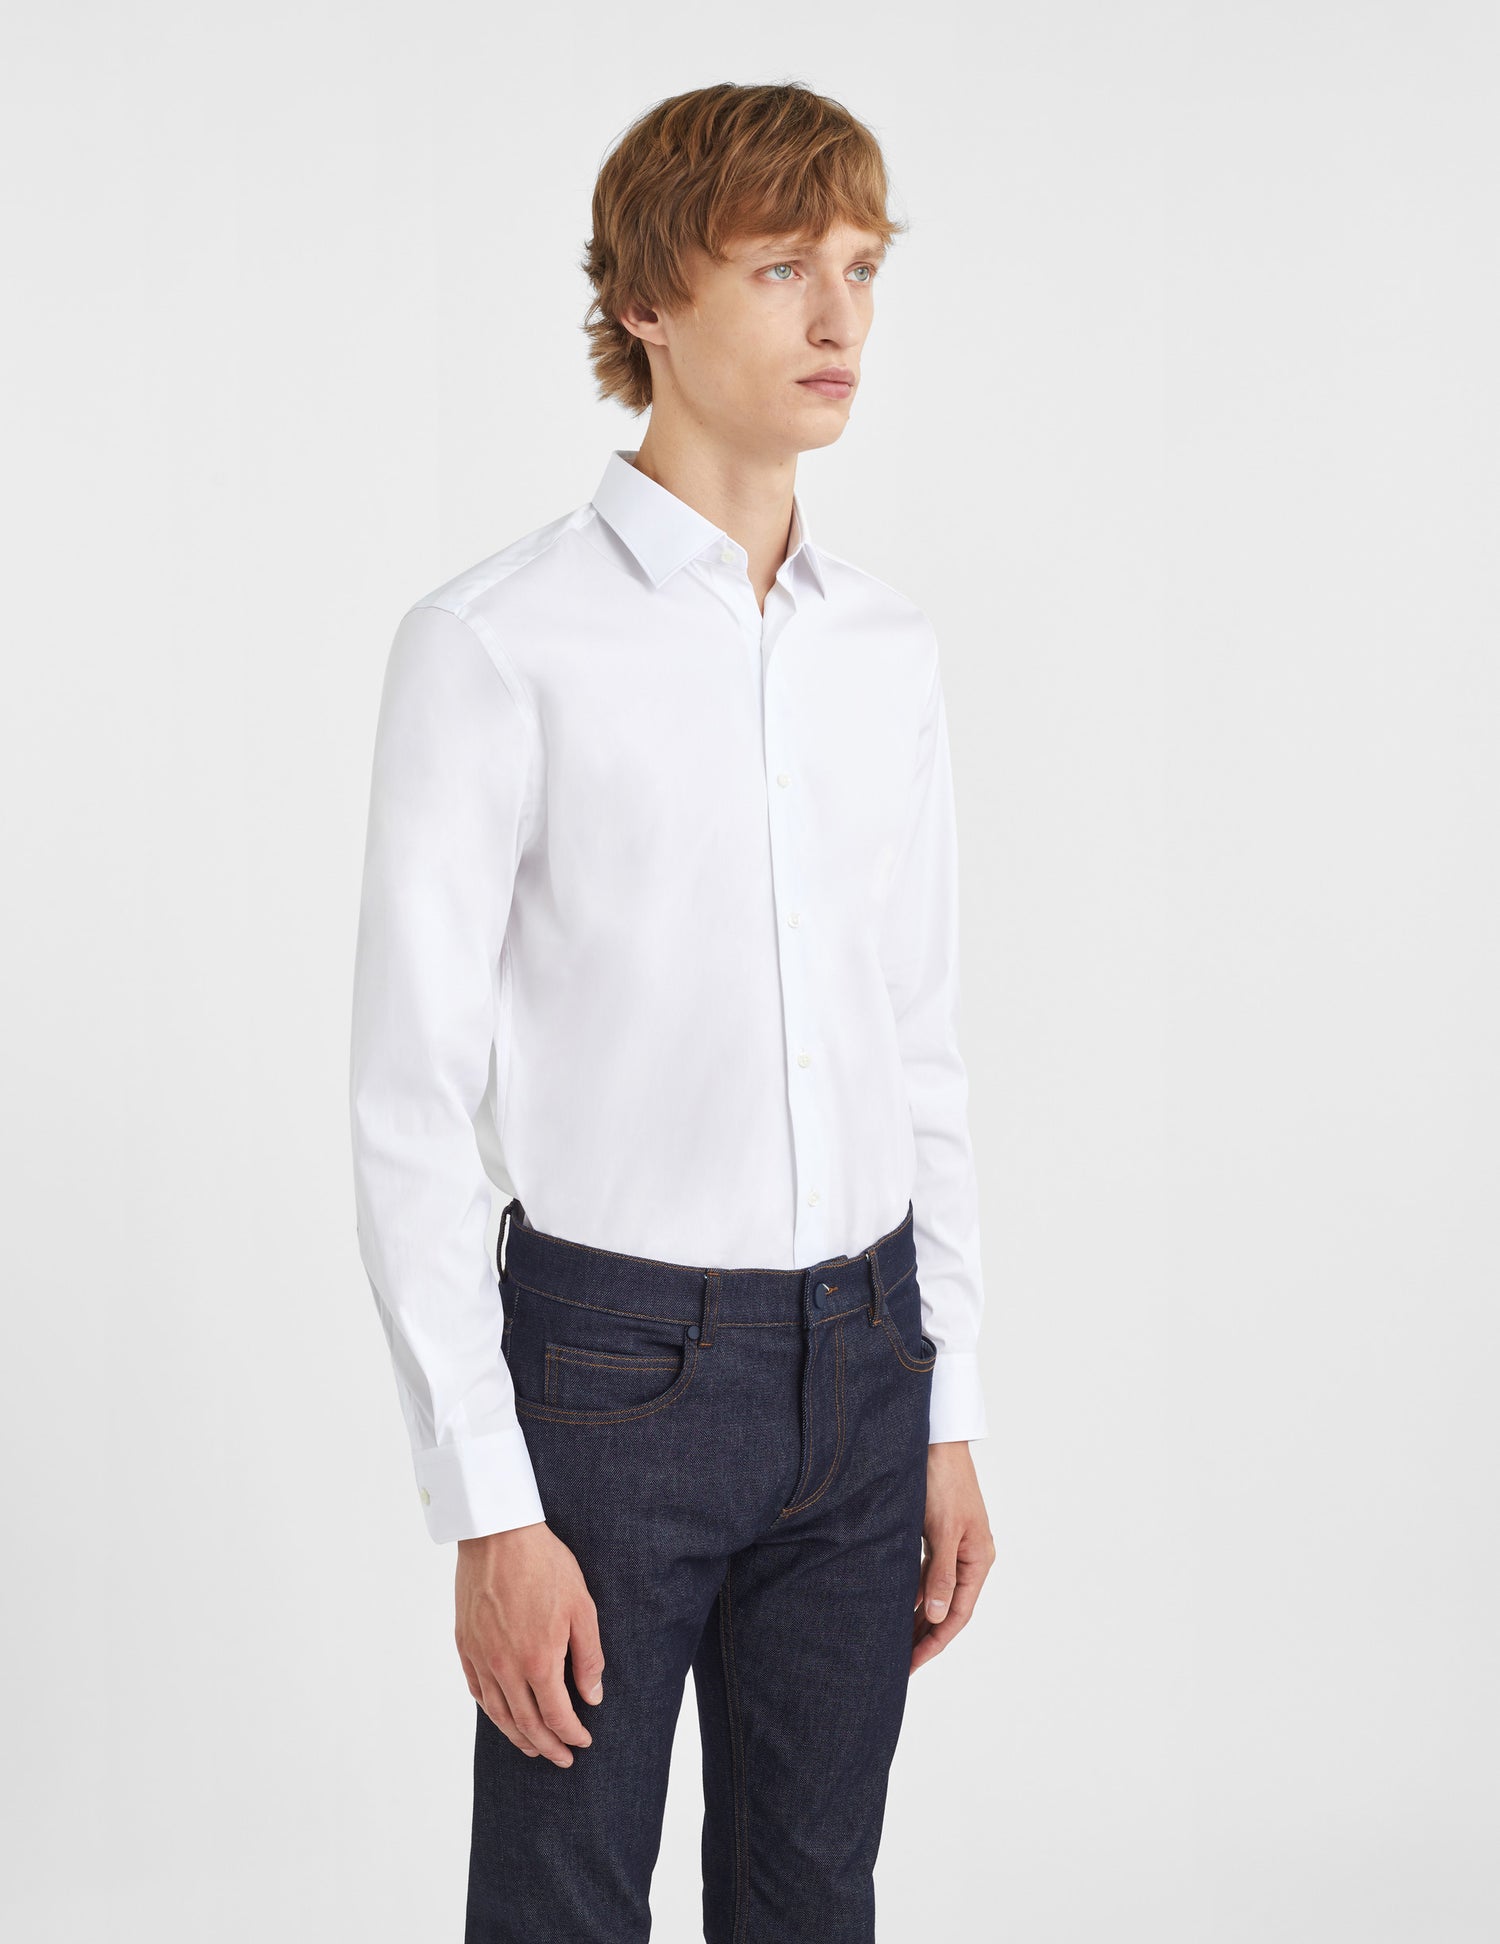 Semi-fitted white stretch shirt - Poplin - Figaret Collar#3